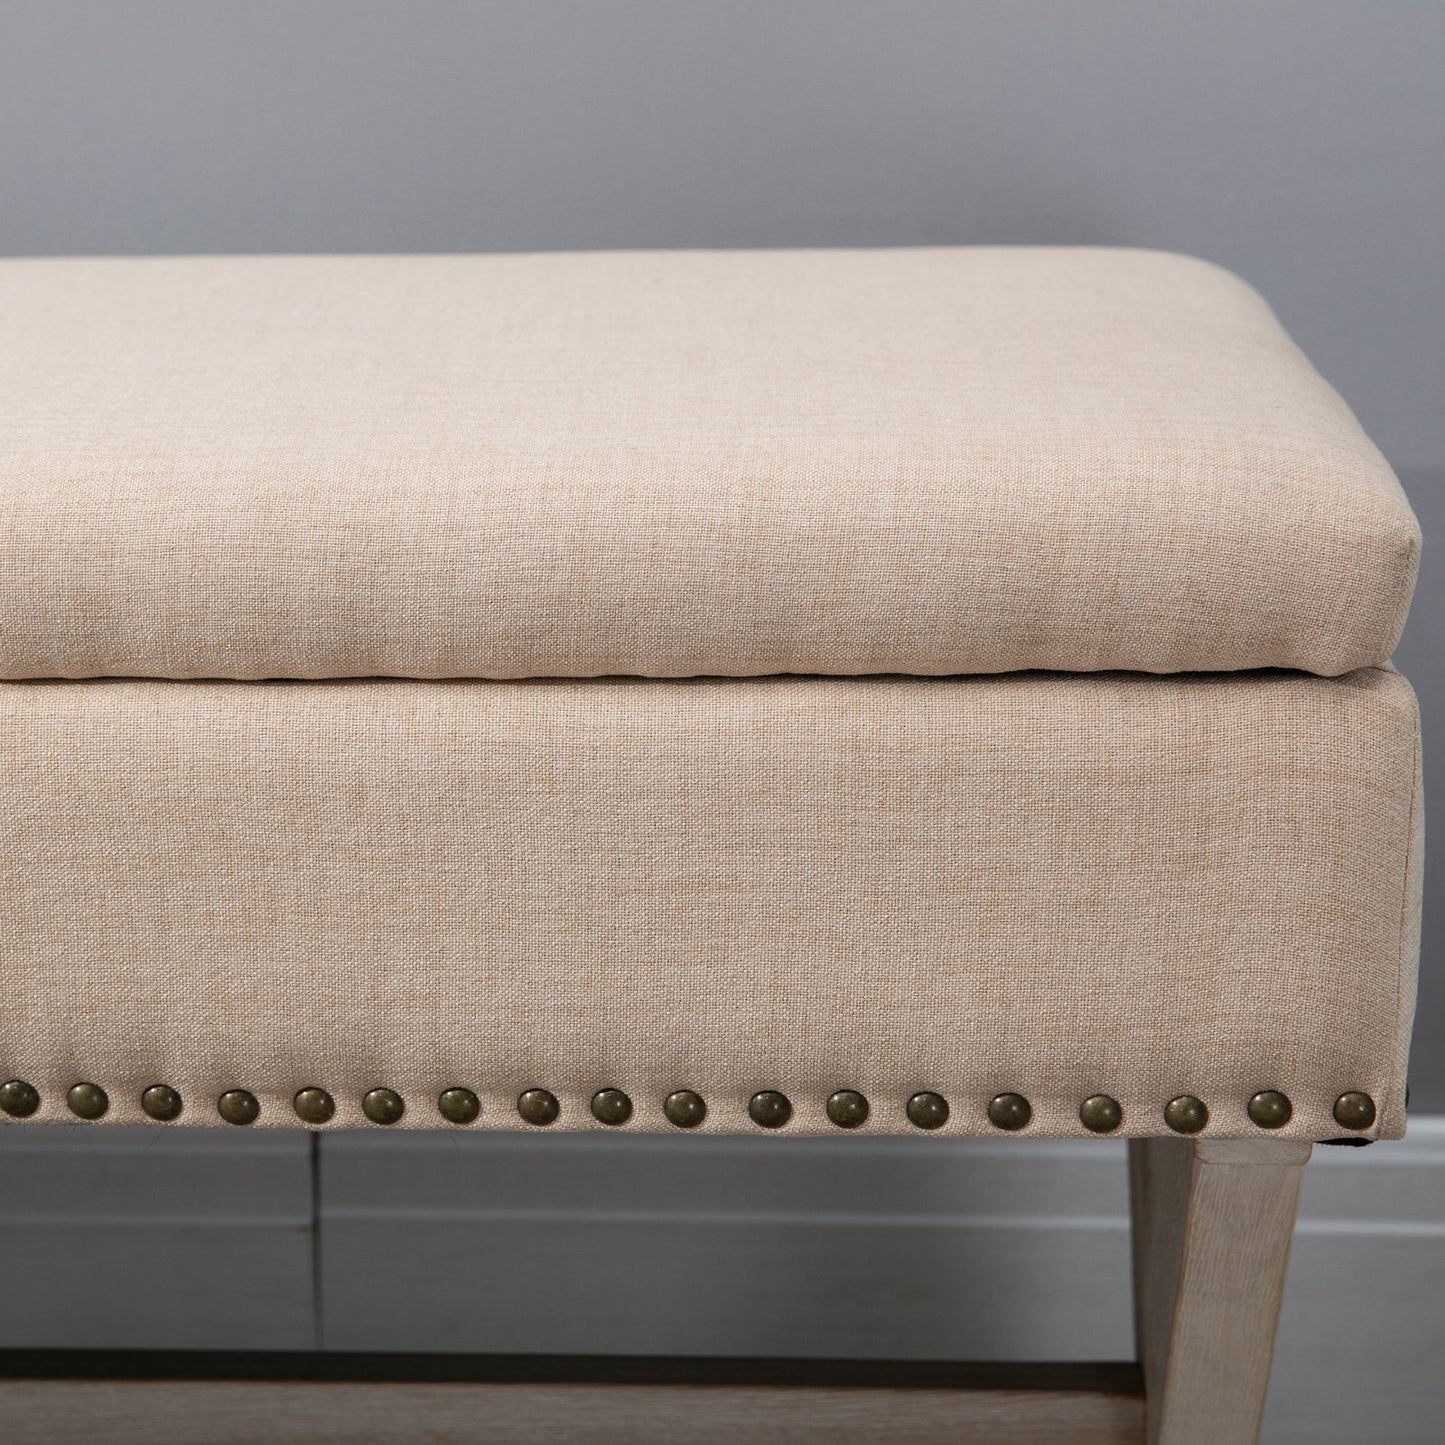 HOMCOM Storage Ottoman Bench Footstool Ottoman Polyester Upholstered Beige